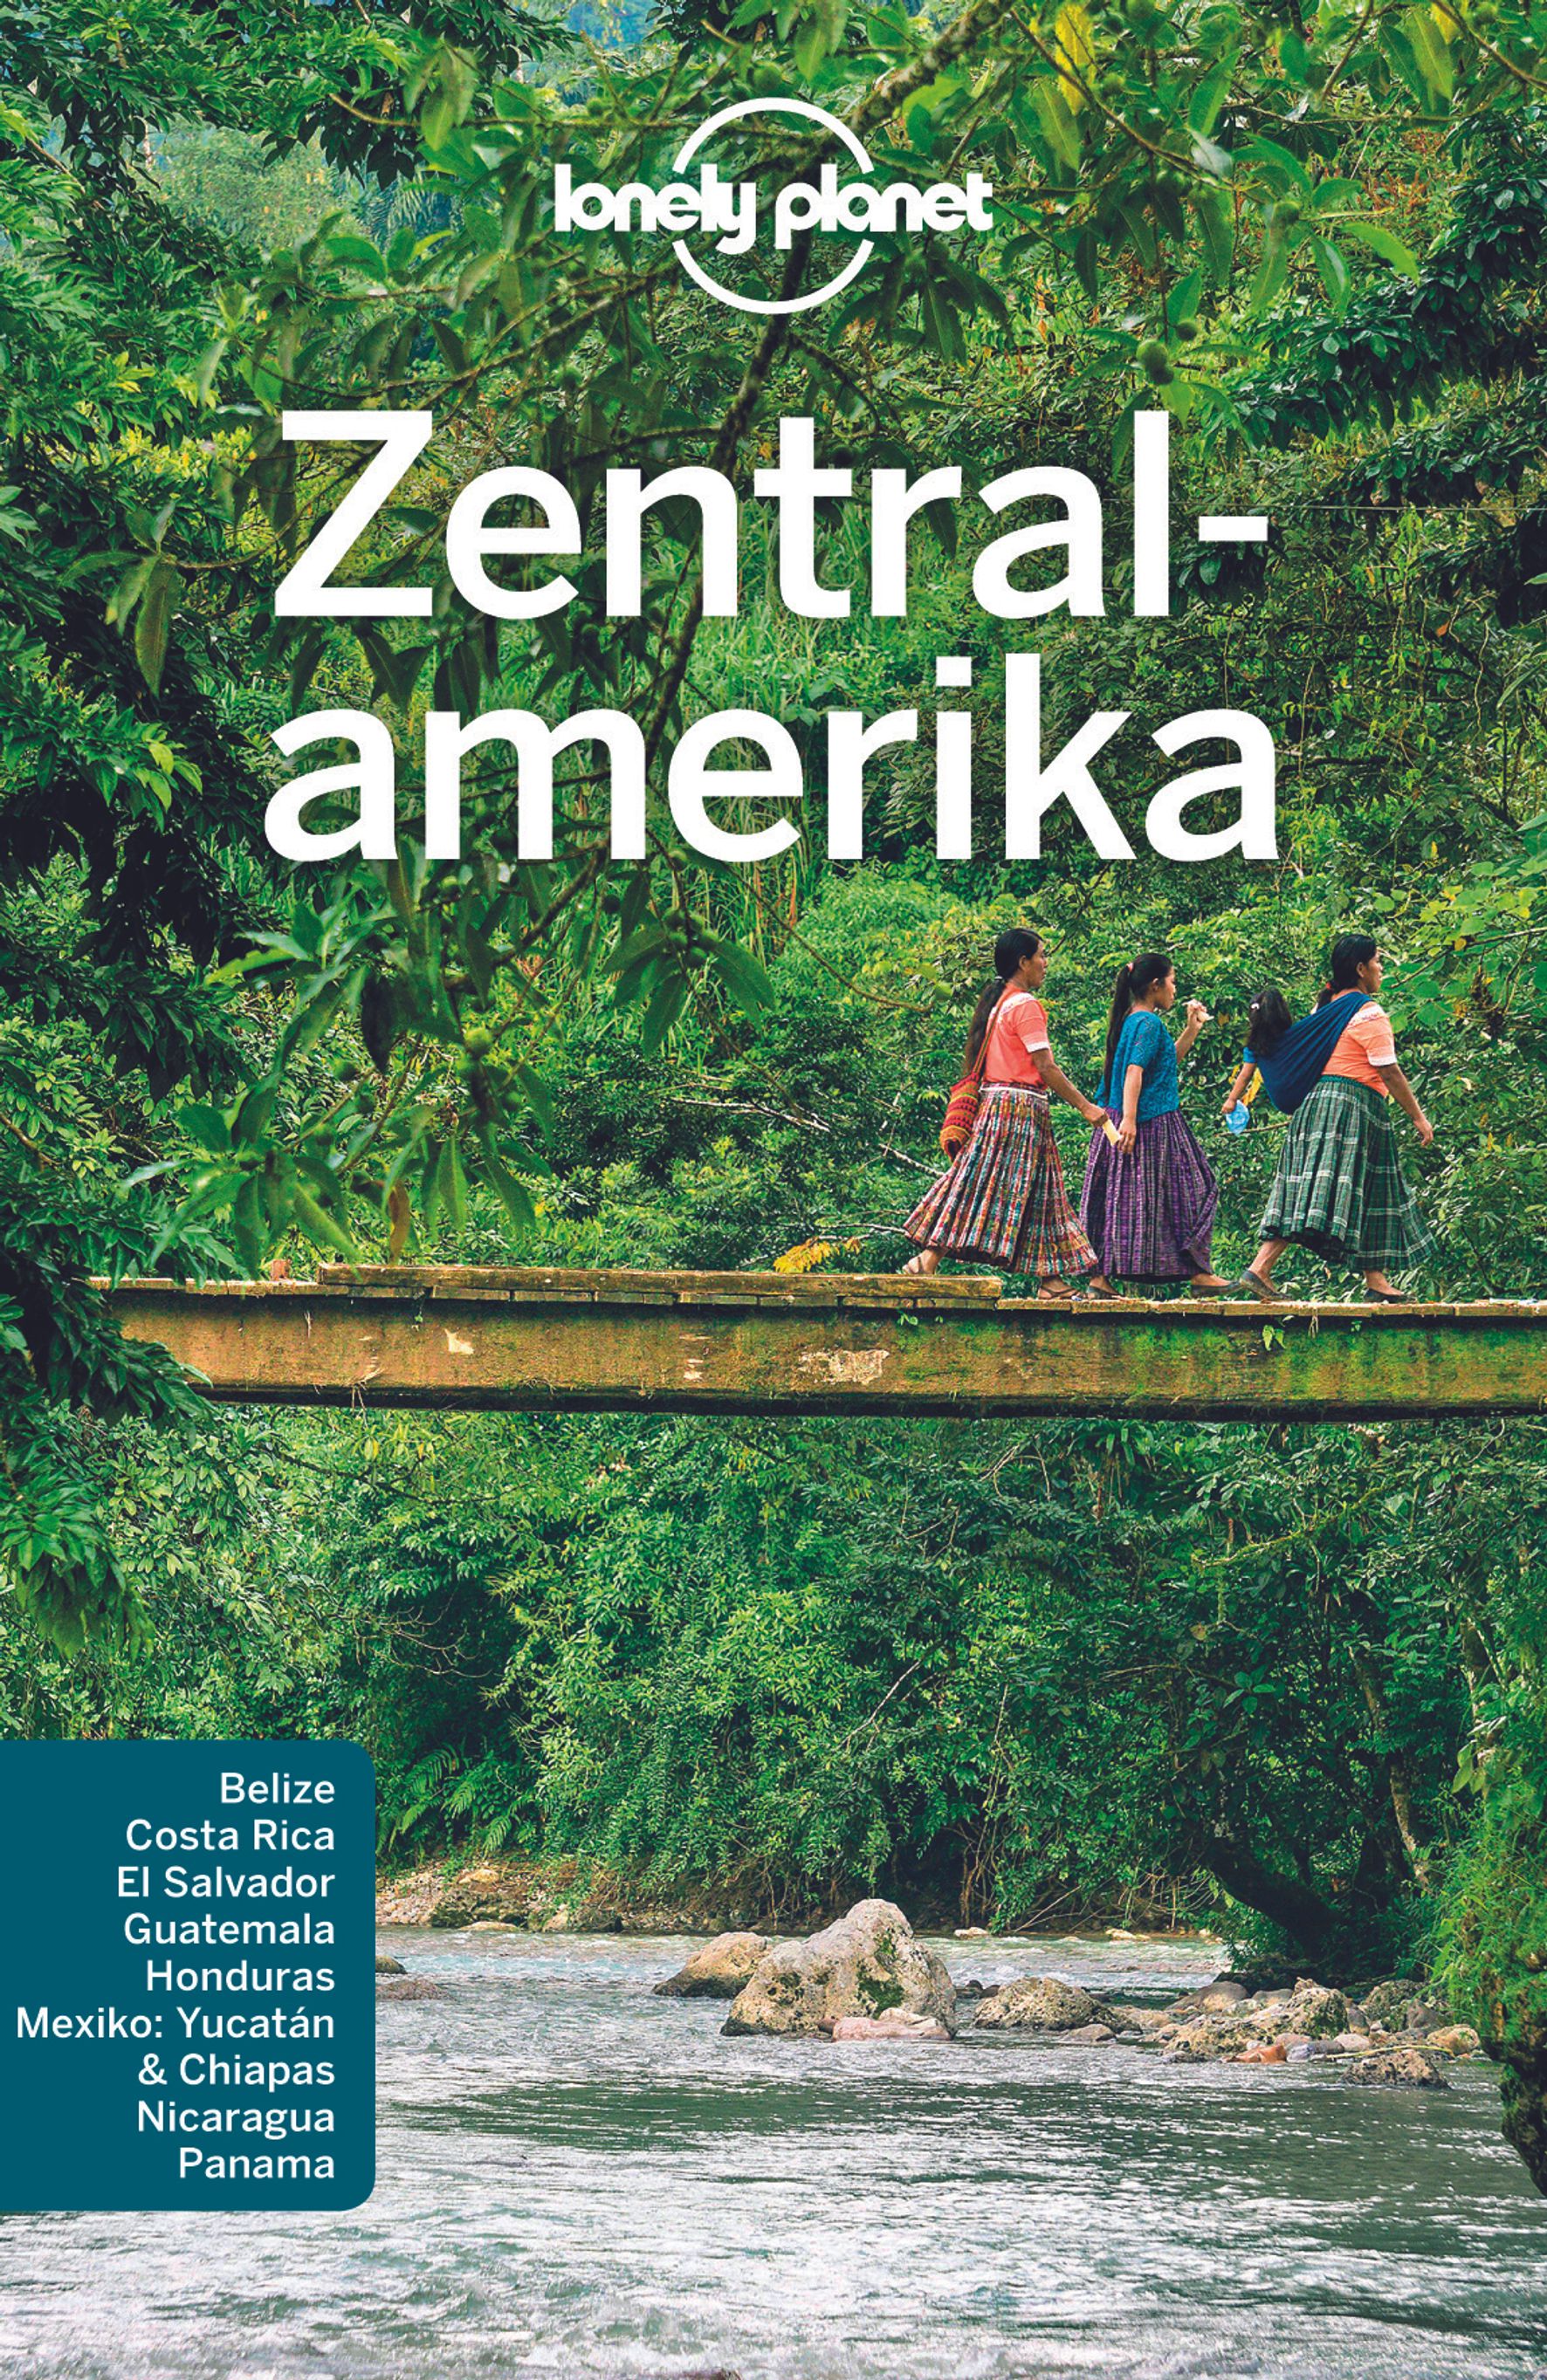 Lonely Planet Zentralamerika